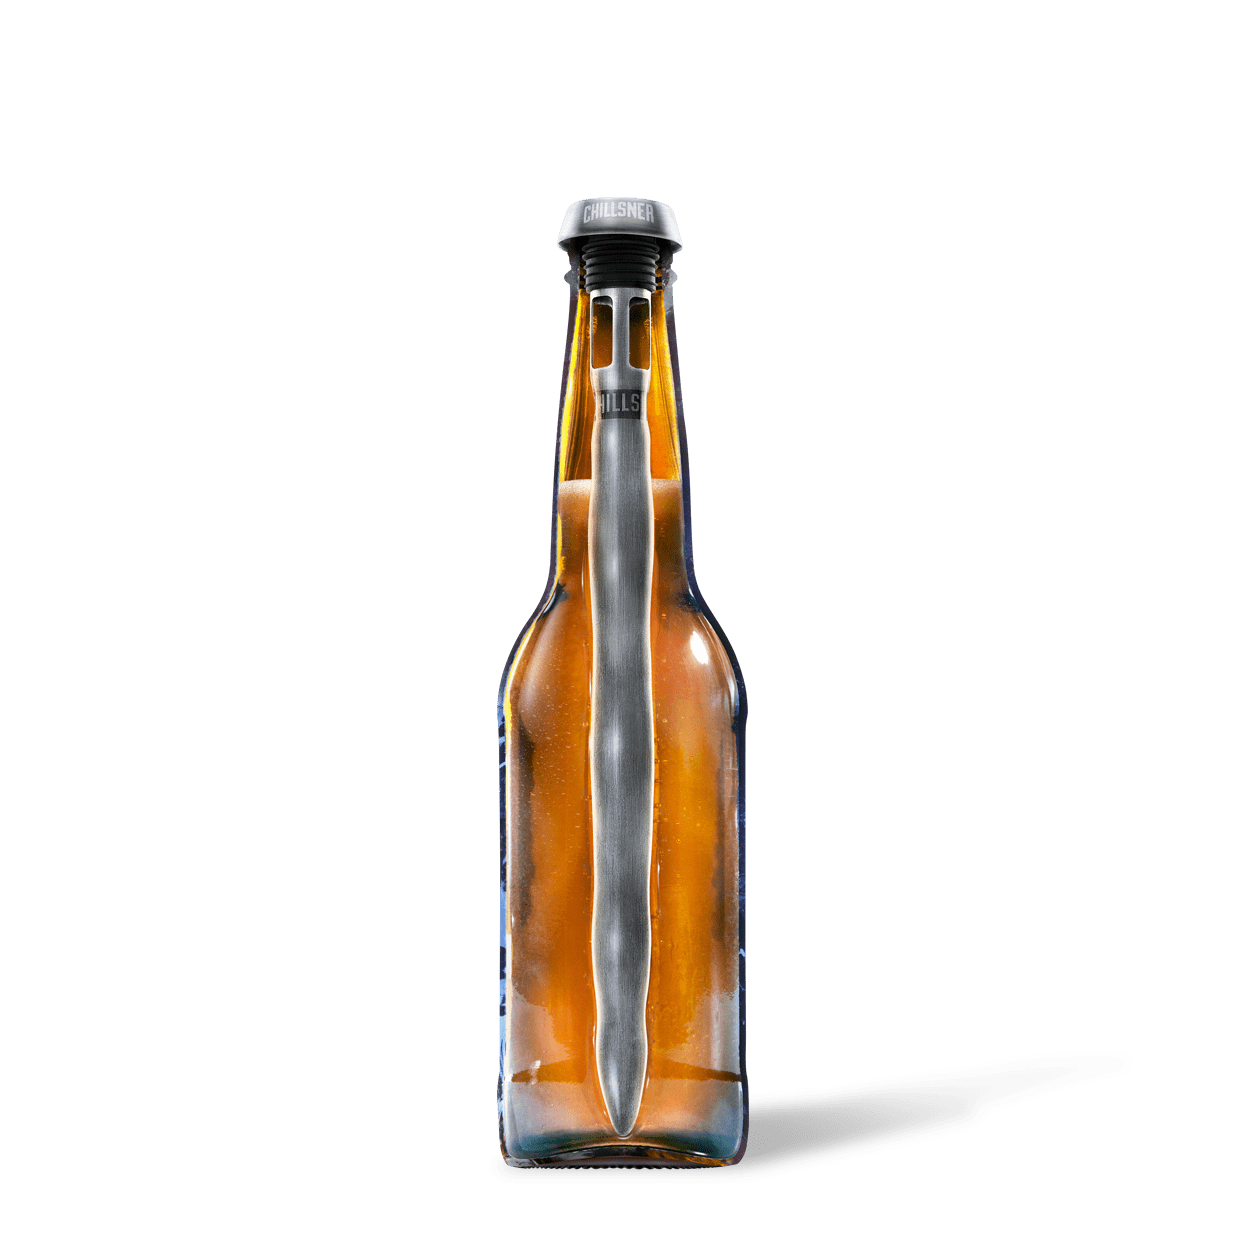 Chillsner beer chiller in beer bottle. 